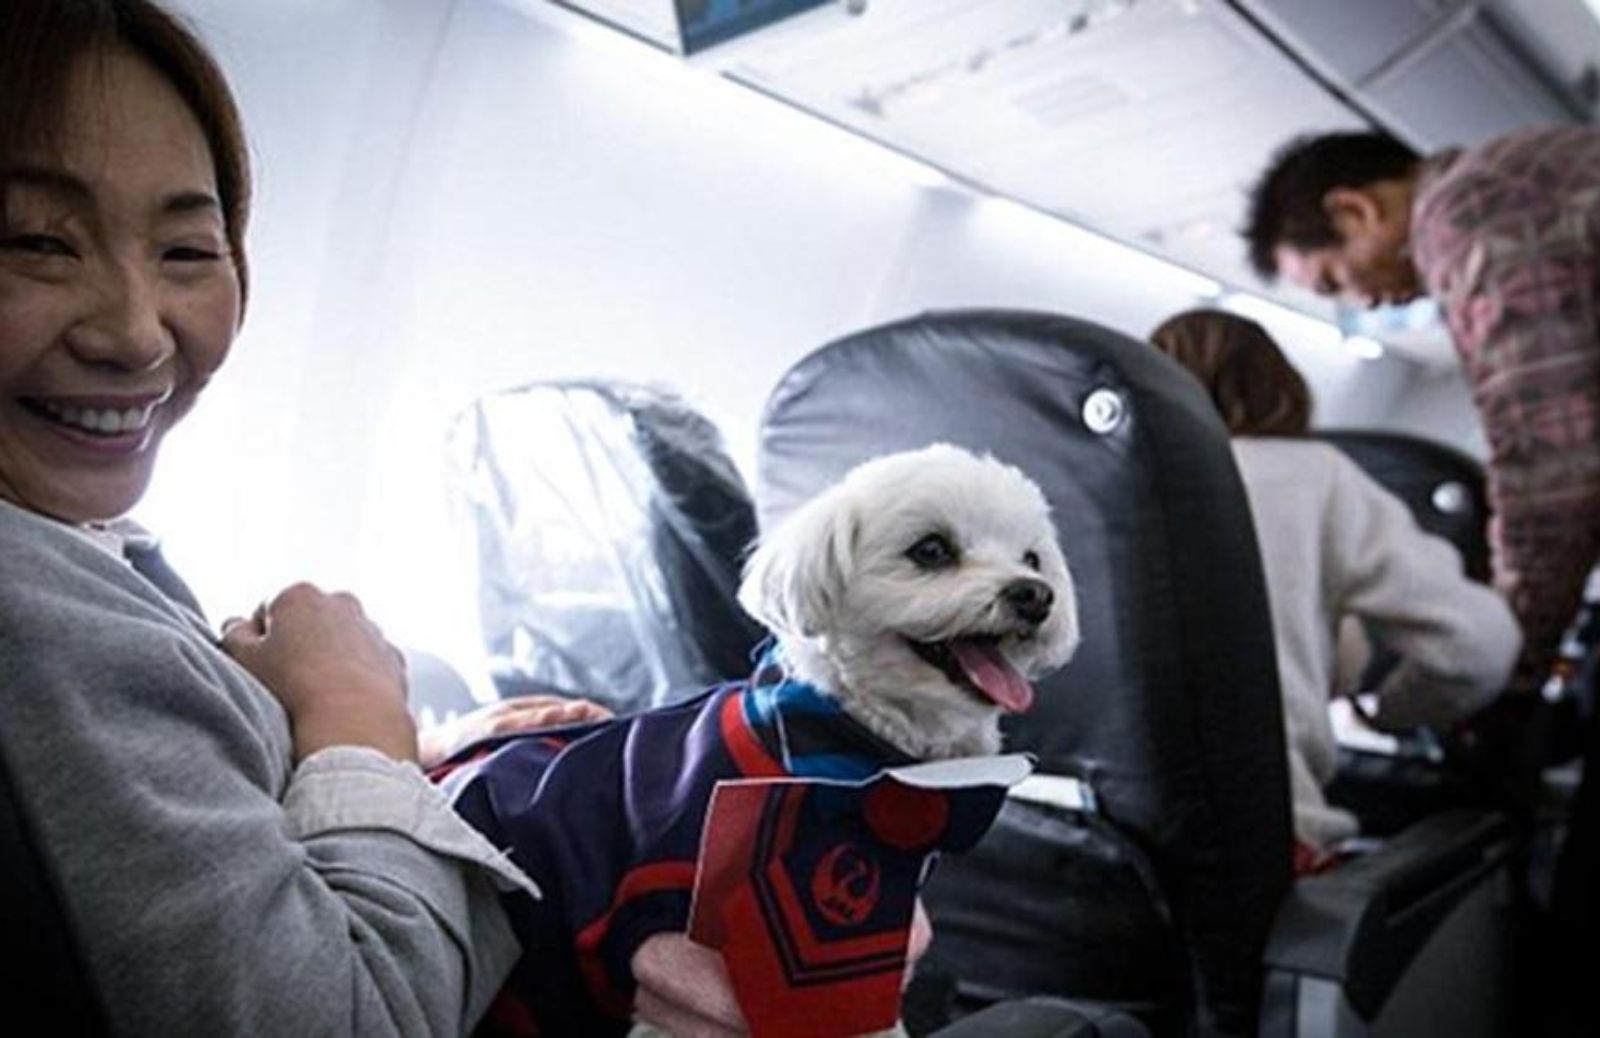 Japan Airlines, basta cani nella stiva